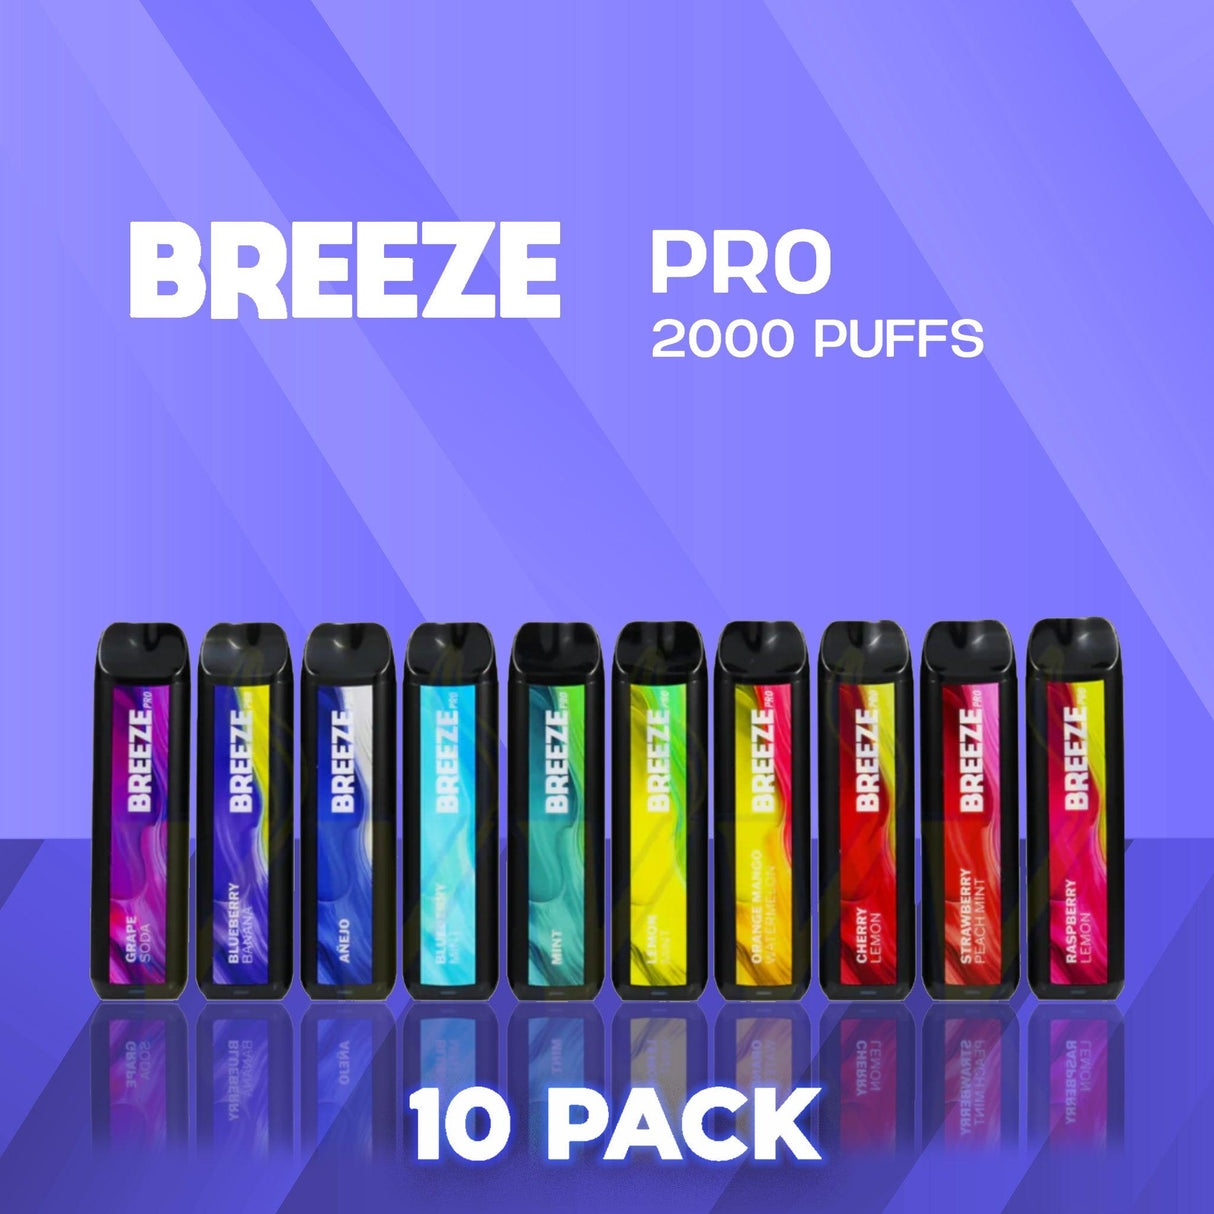 10 Pack of Breeze Pro Disposable Vape